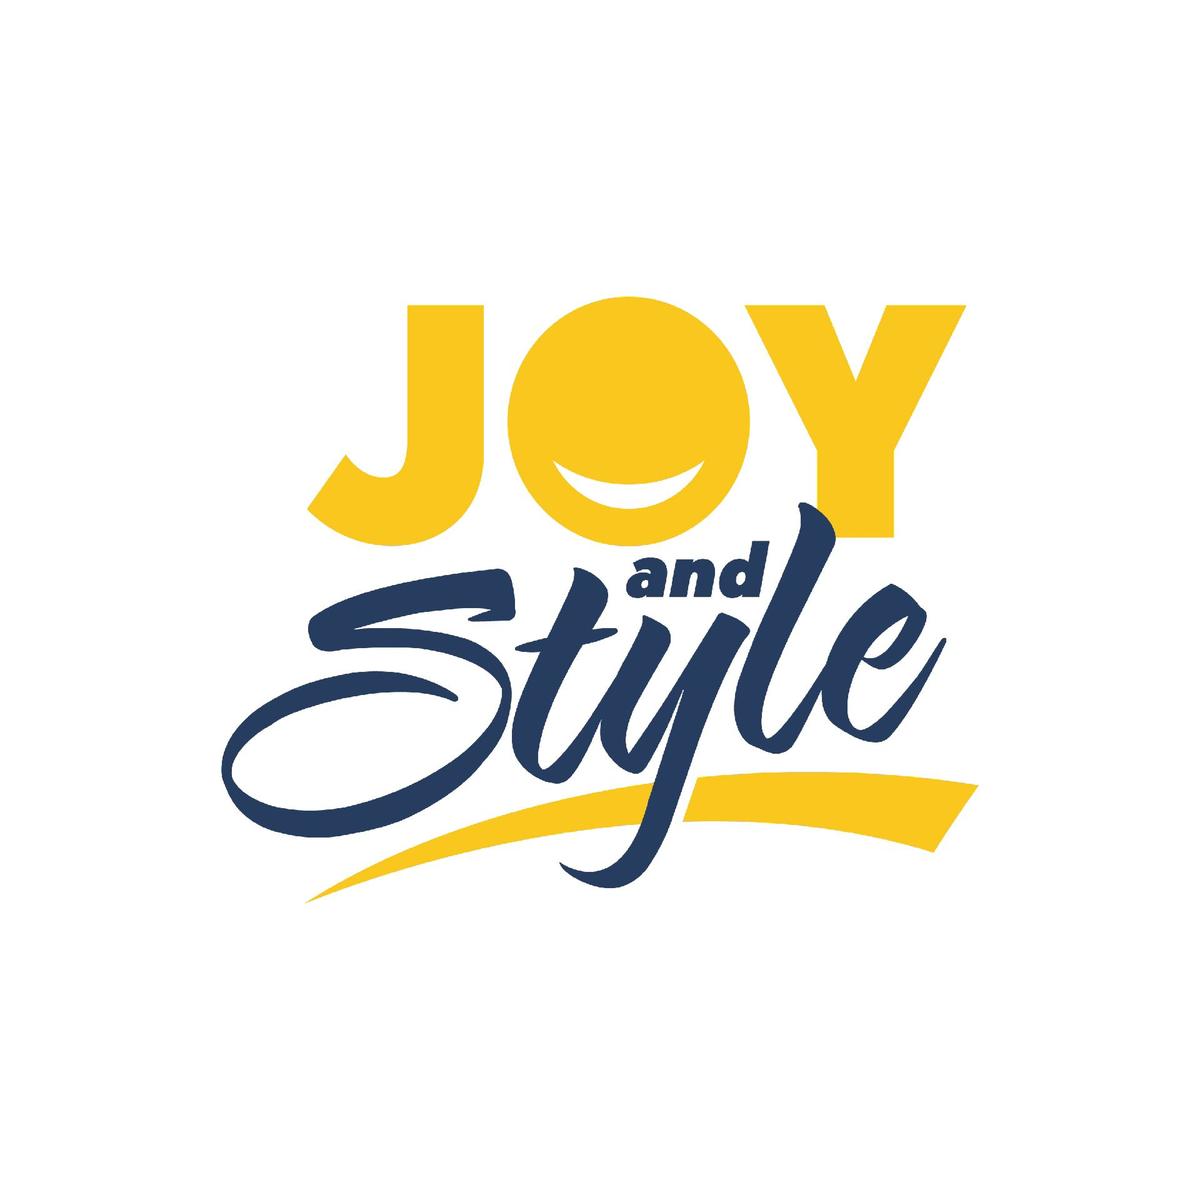 joynstyle's images